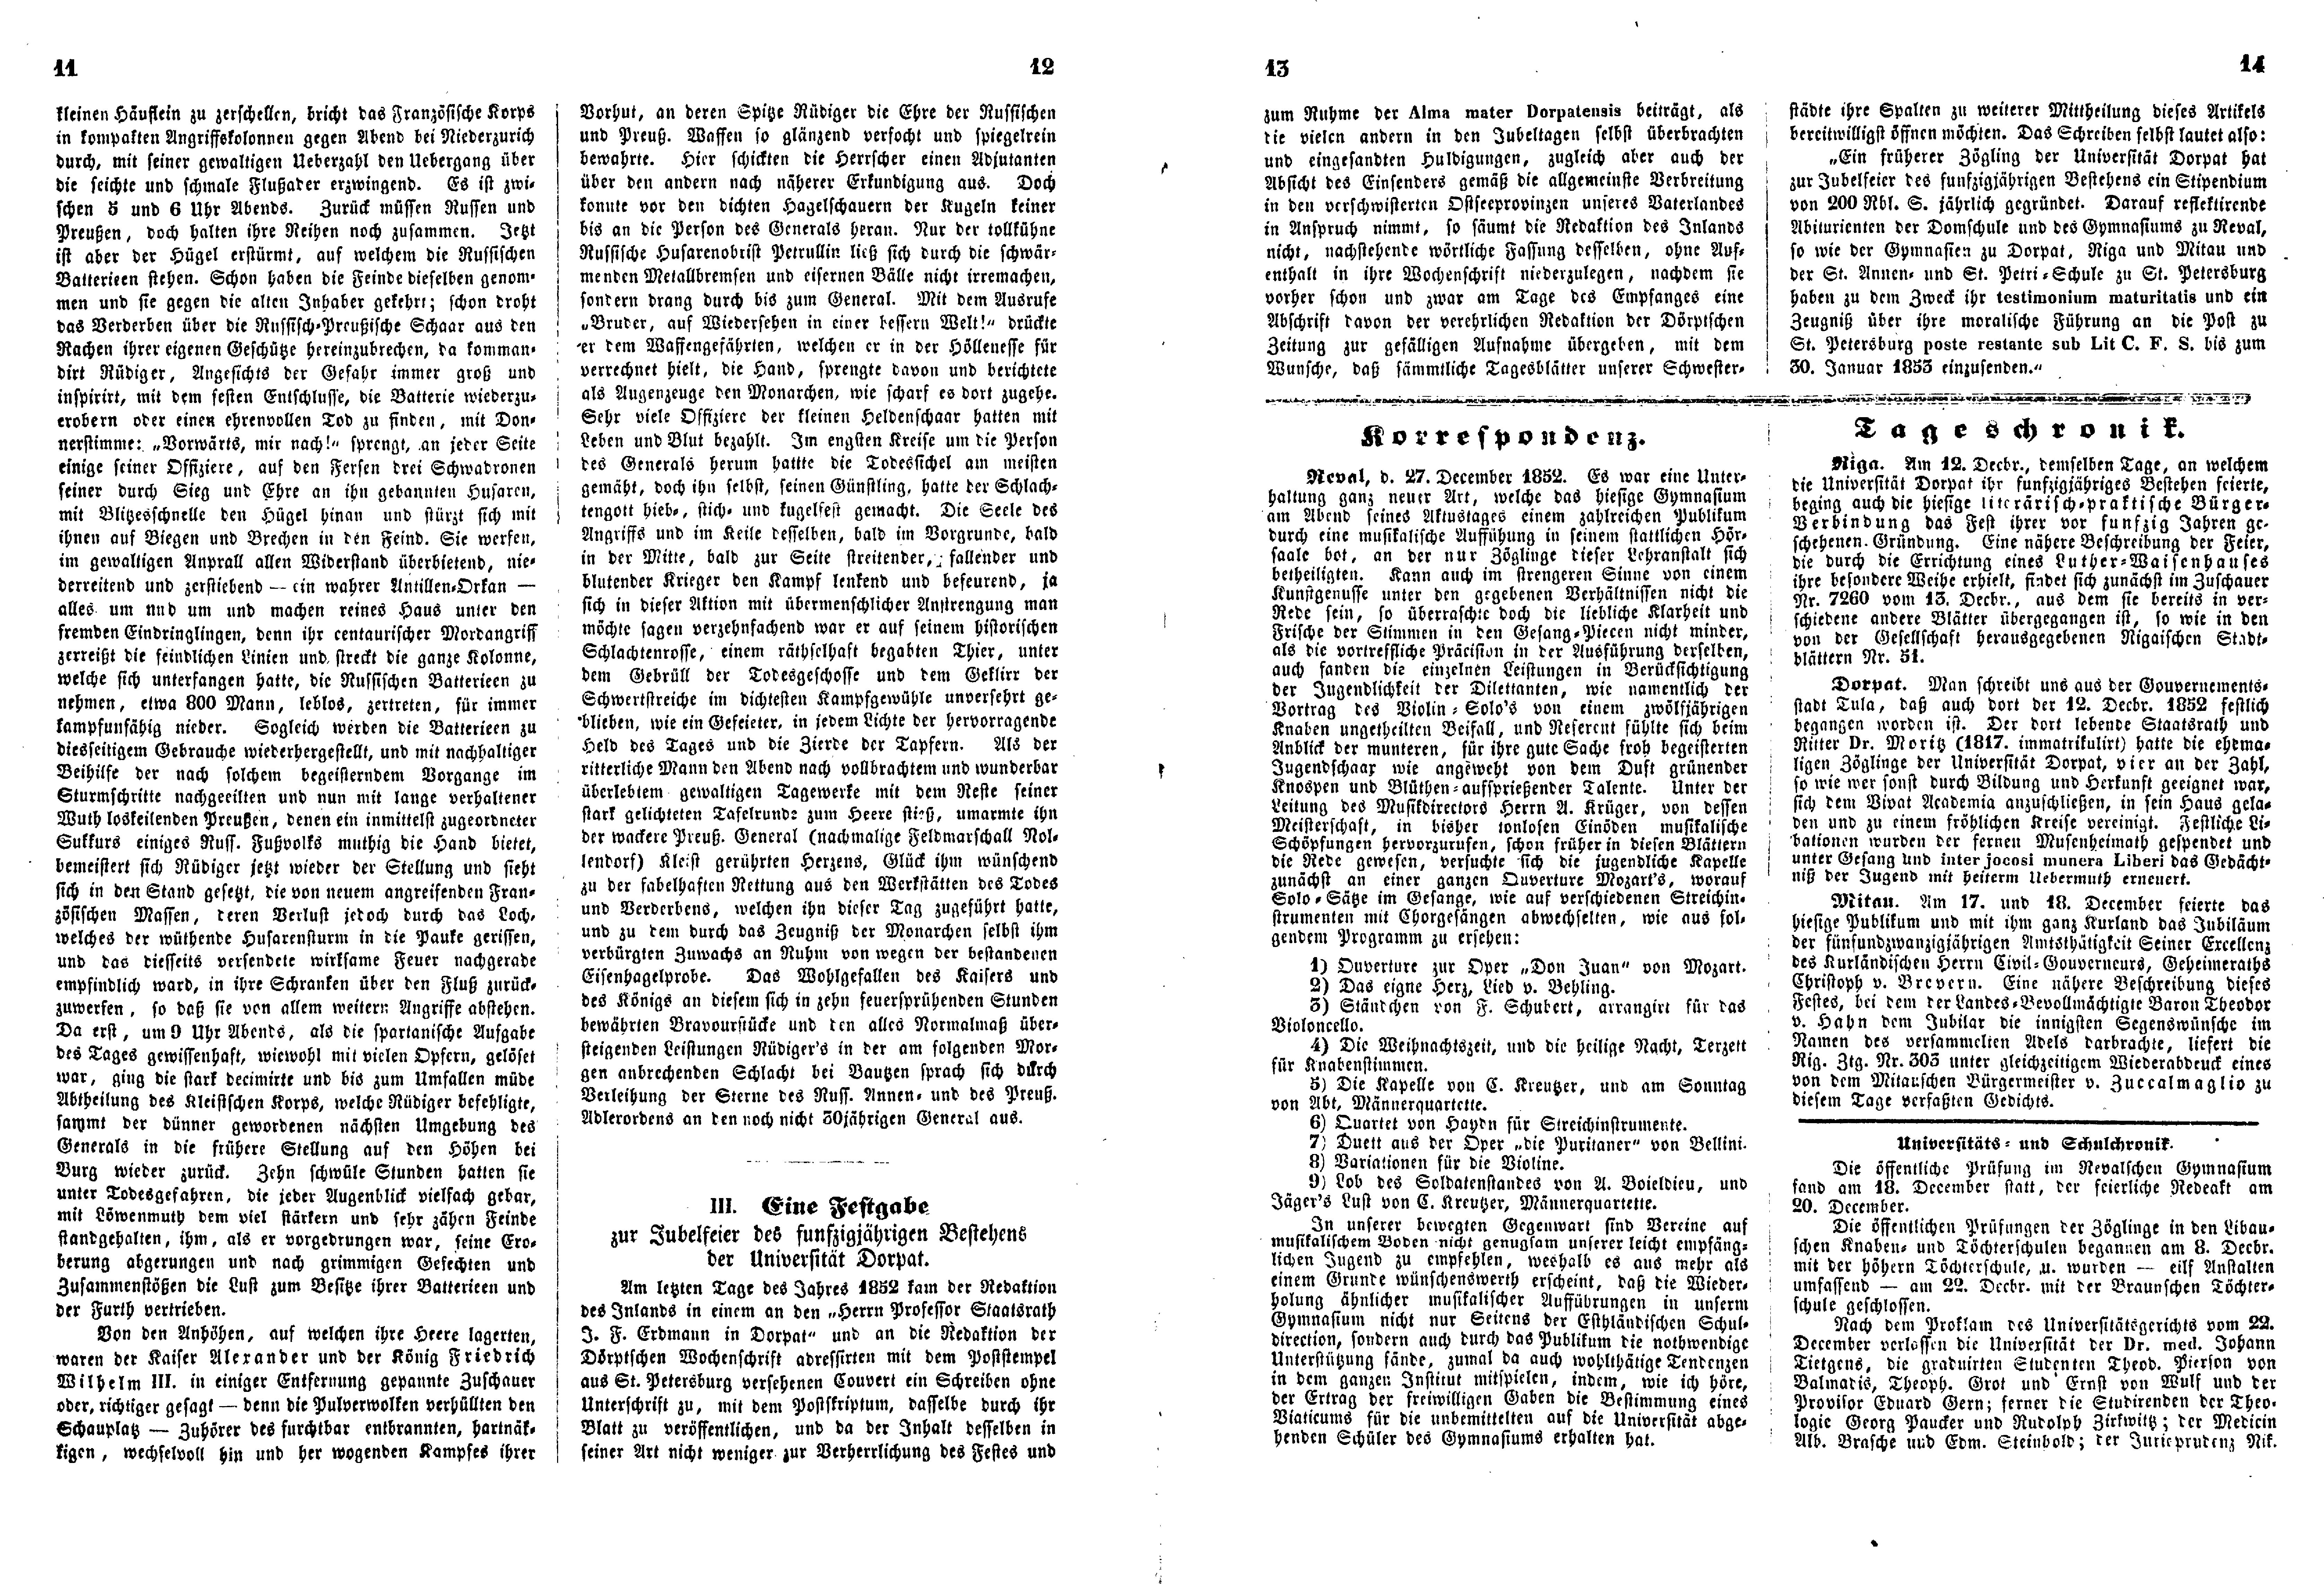 Das Inland [18] (1853) | 13. (11-14) Main body of text